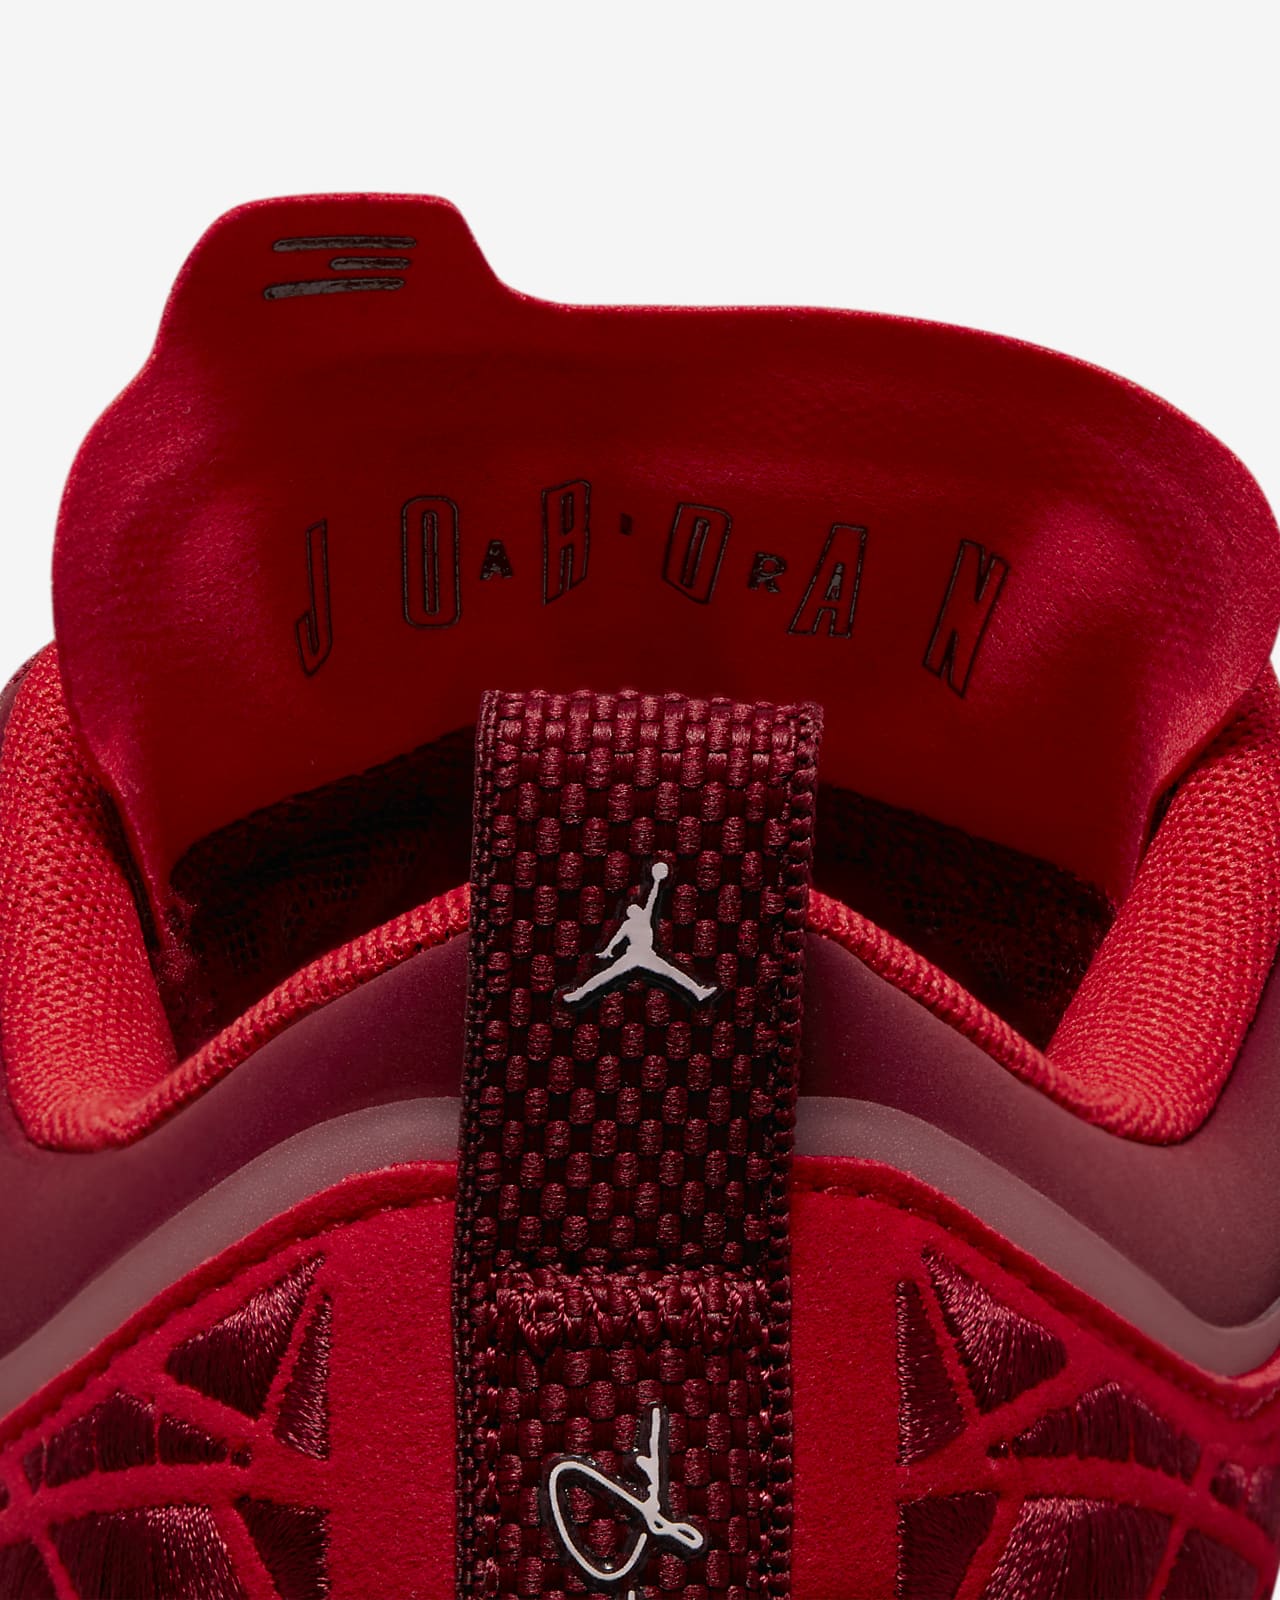 Premisa frijoles Absay Air Jordan XXXVII Low Women's Basketball Shoes. Nike ID